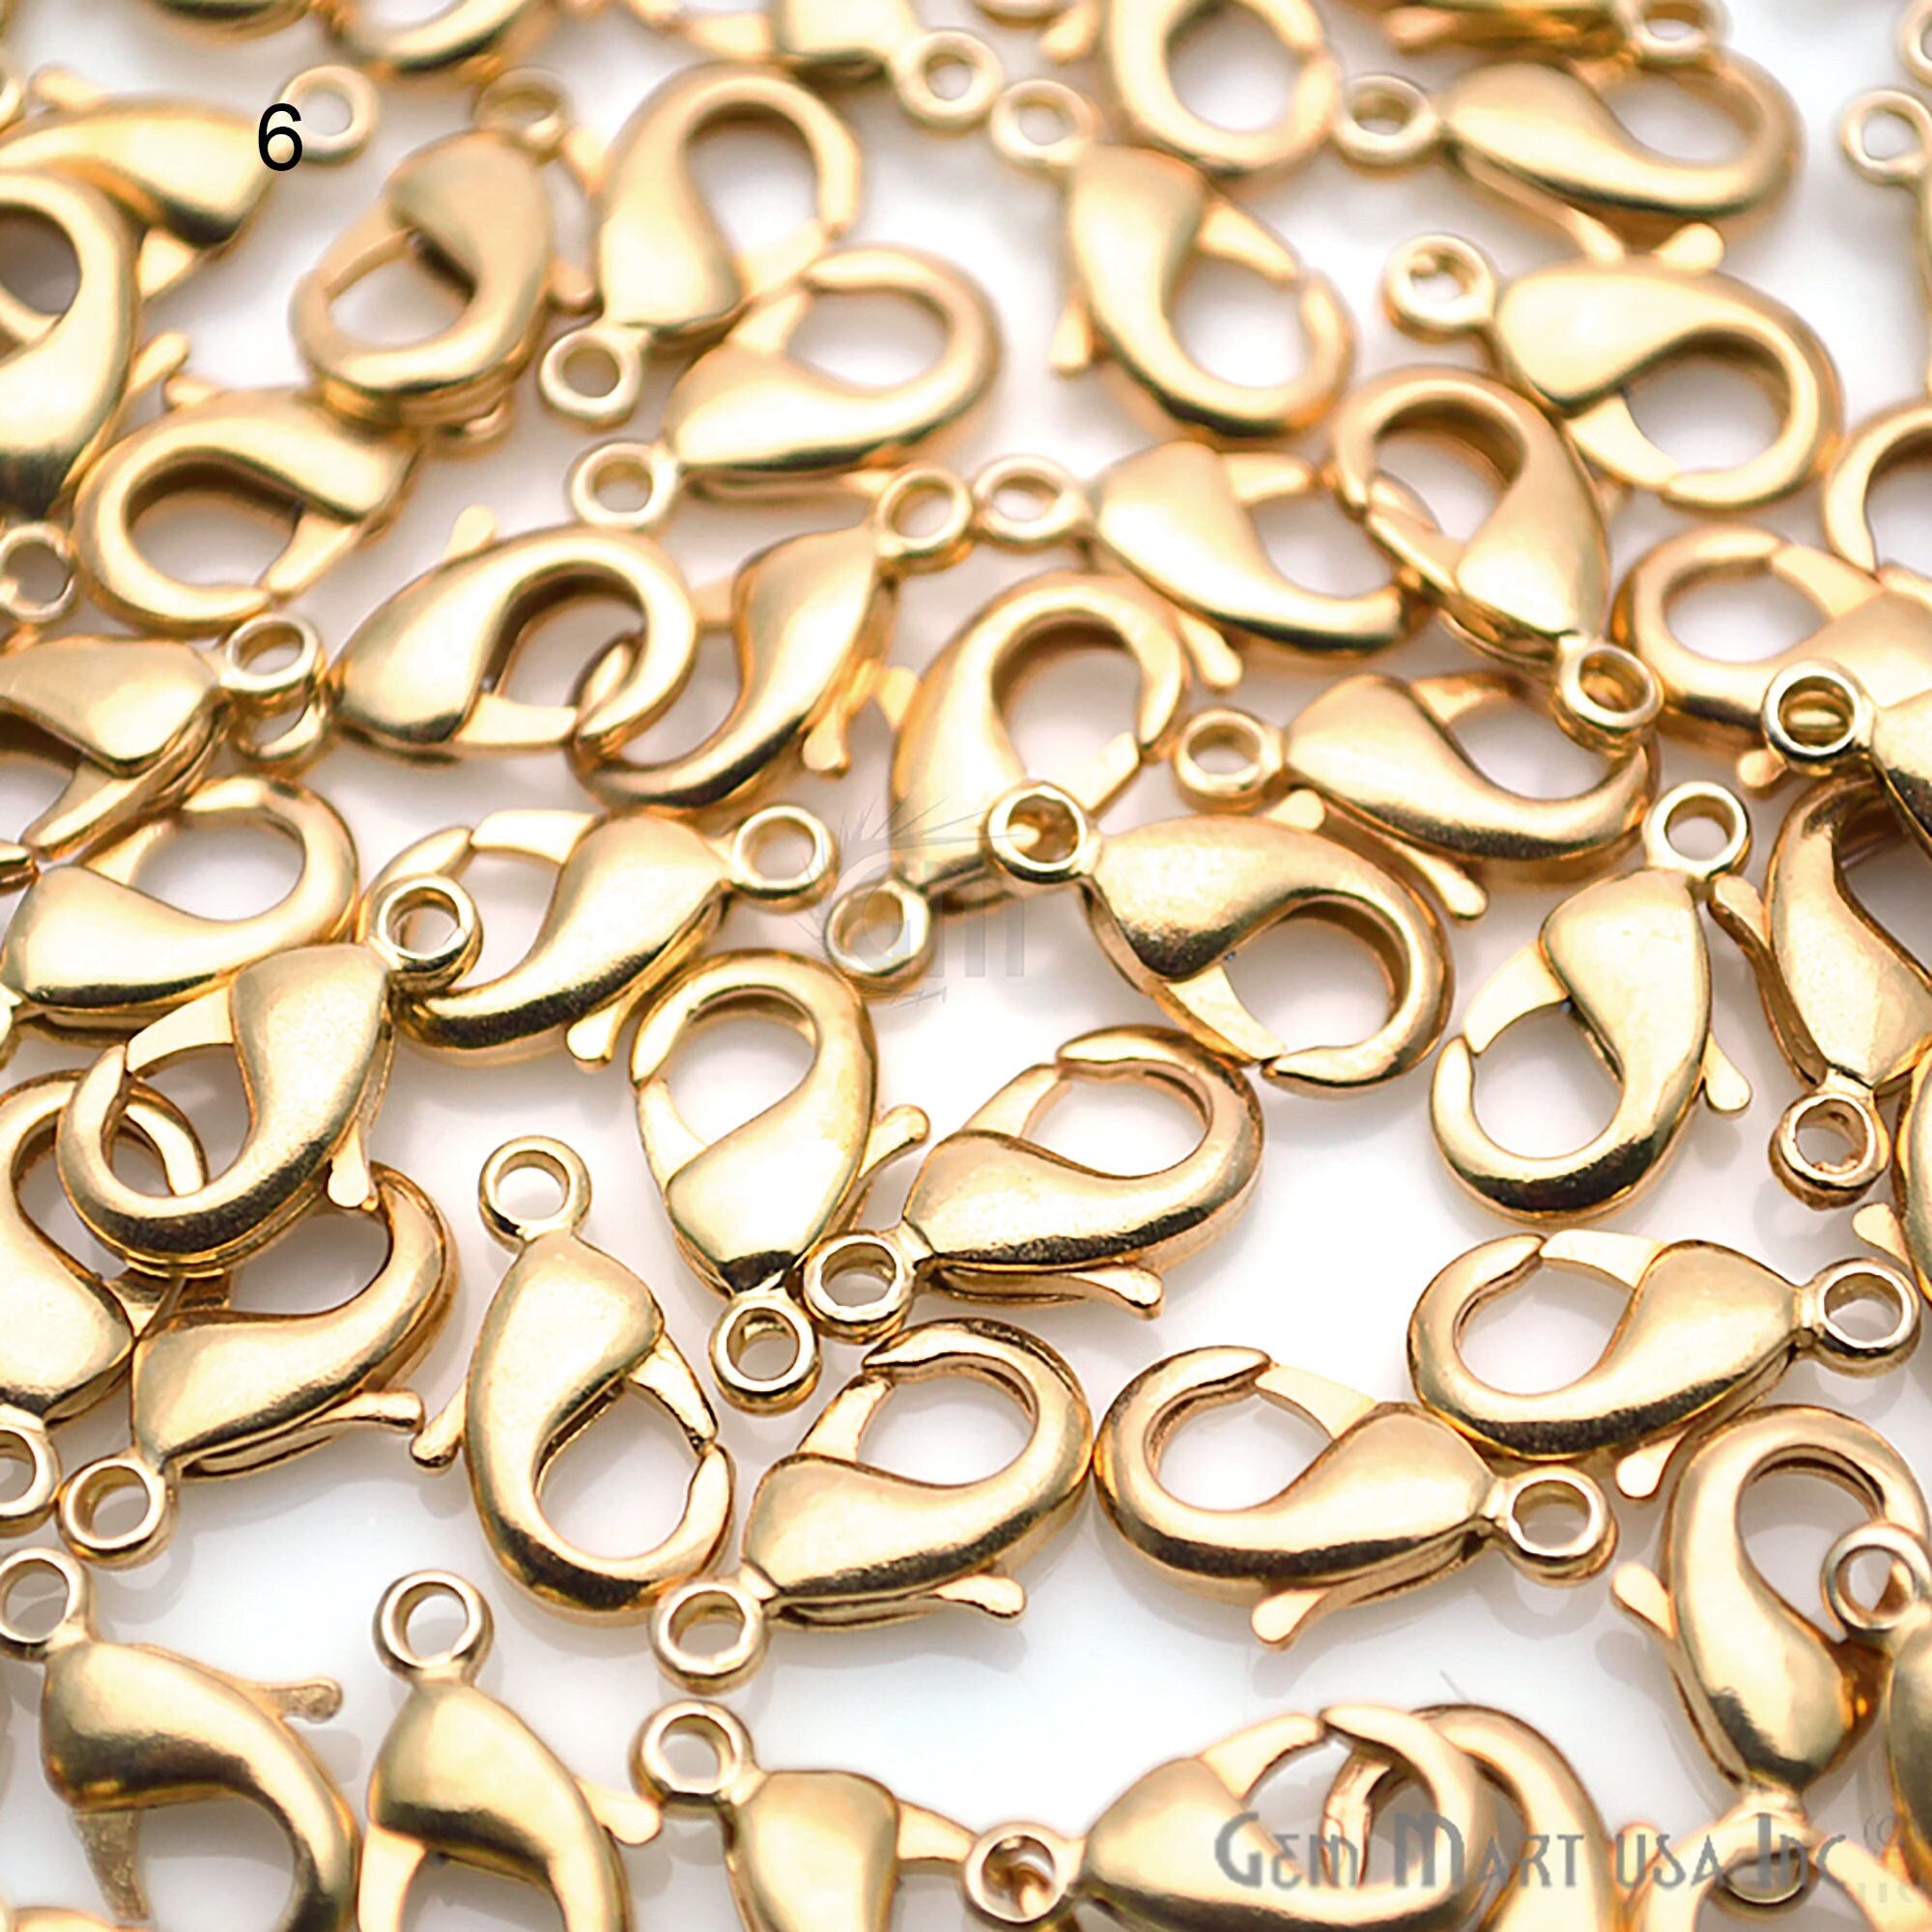 760Pcs Jewelry Making Findings Clasps Hooks DIY Necklace Earring